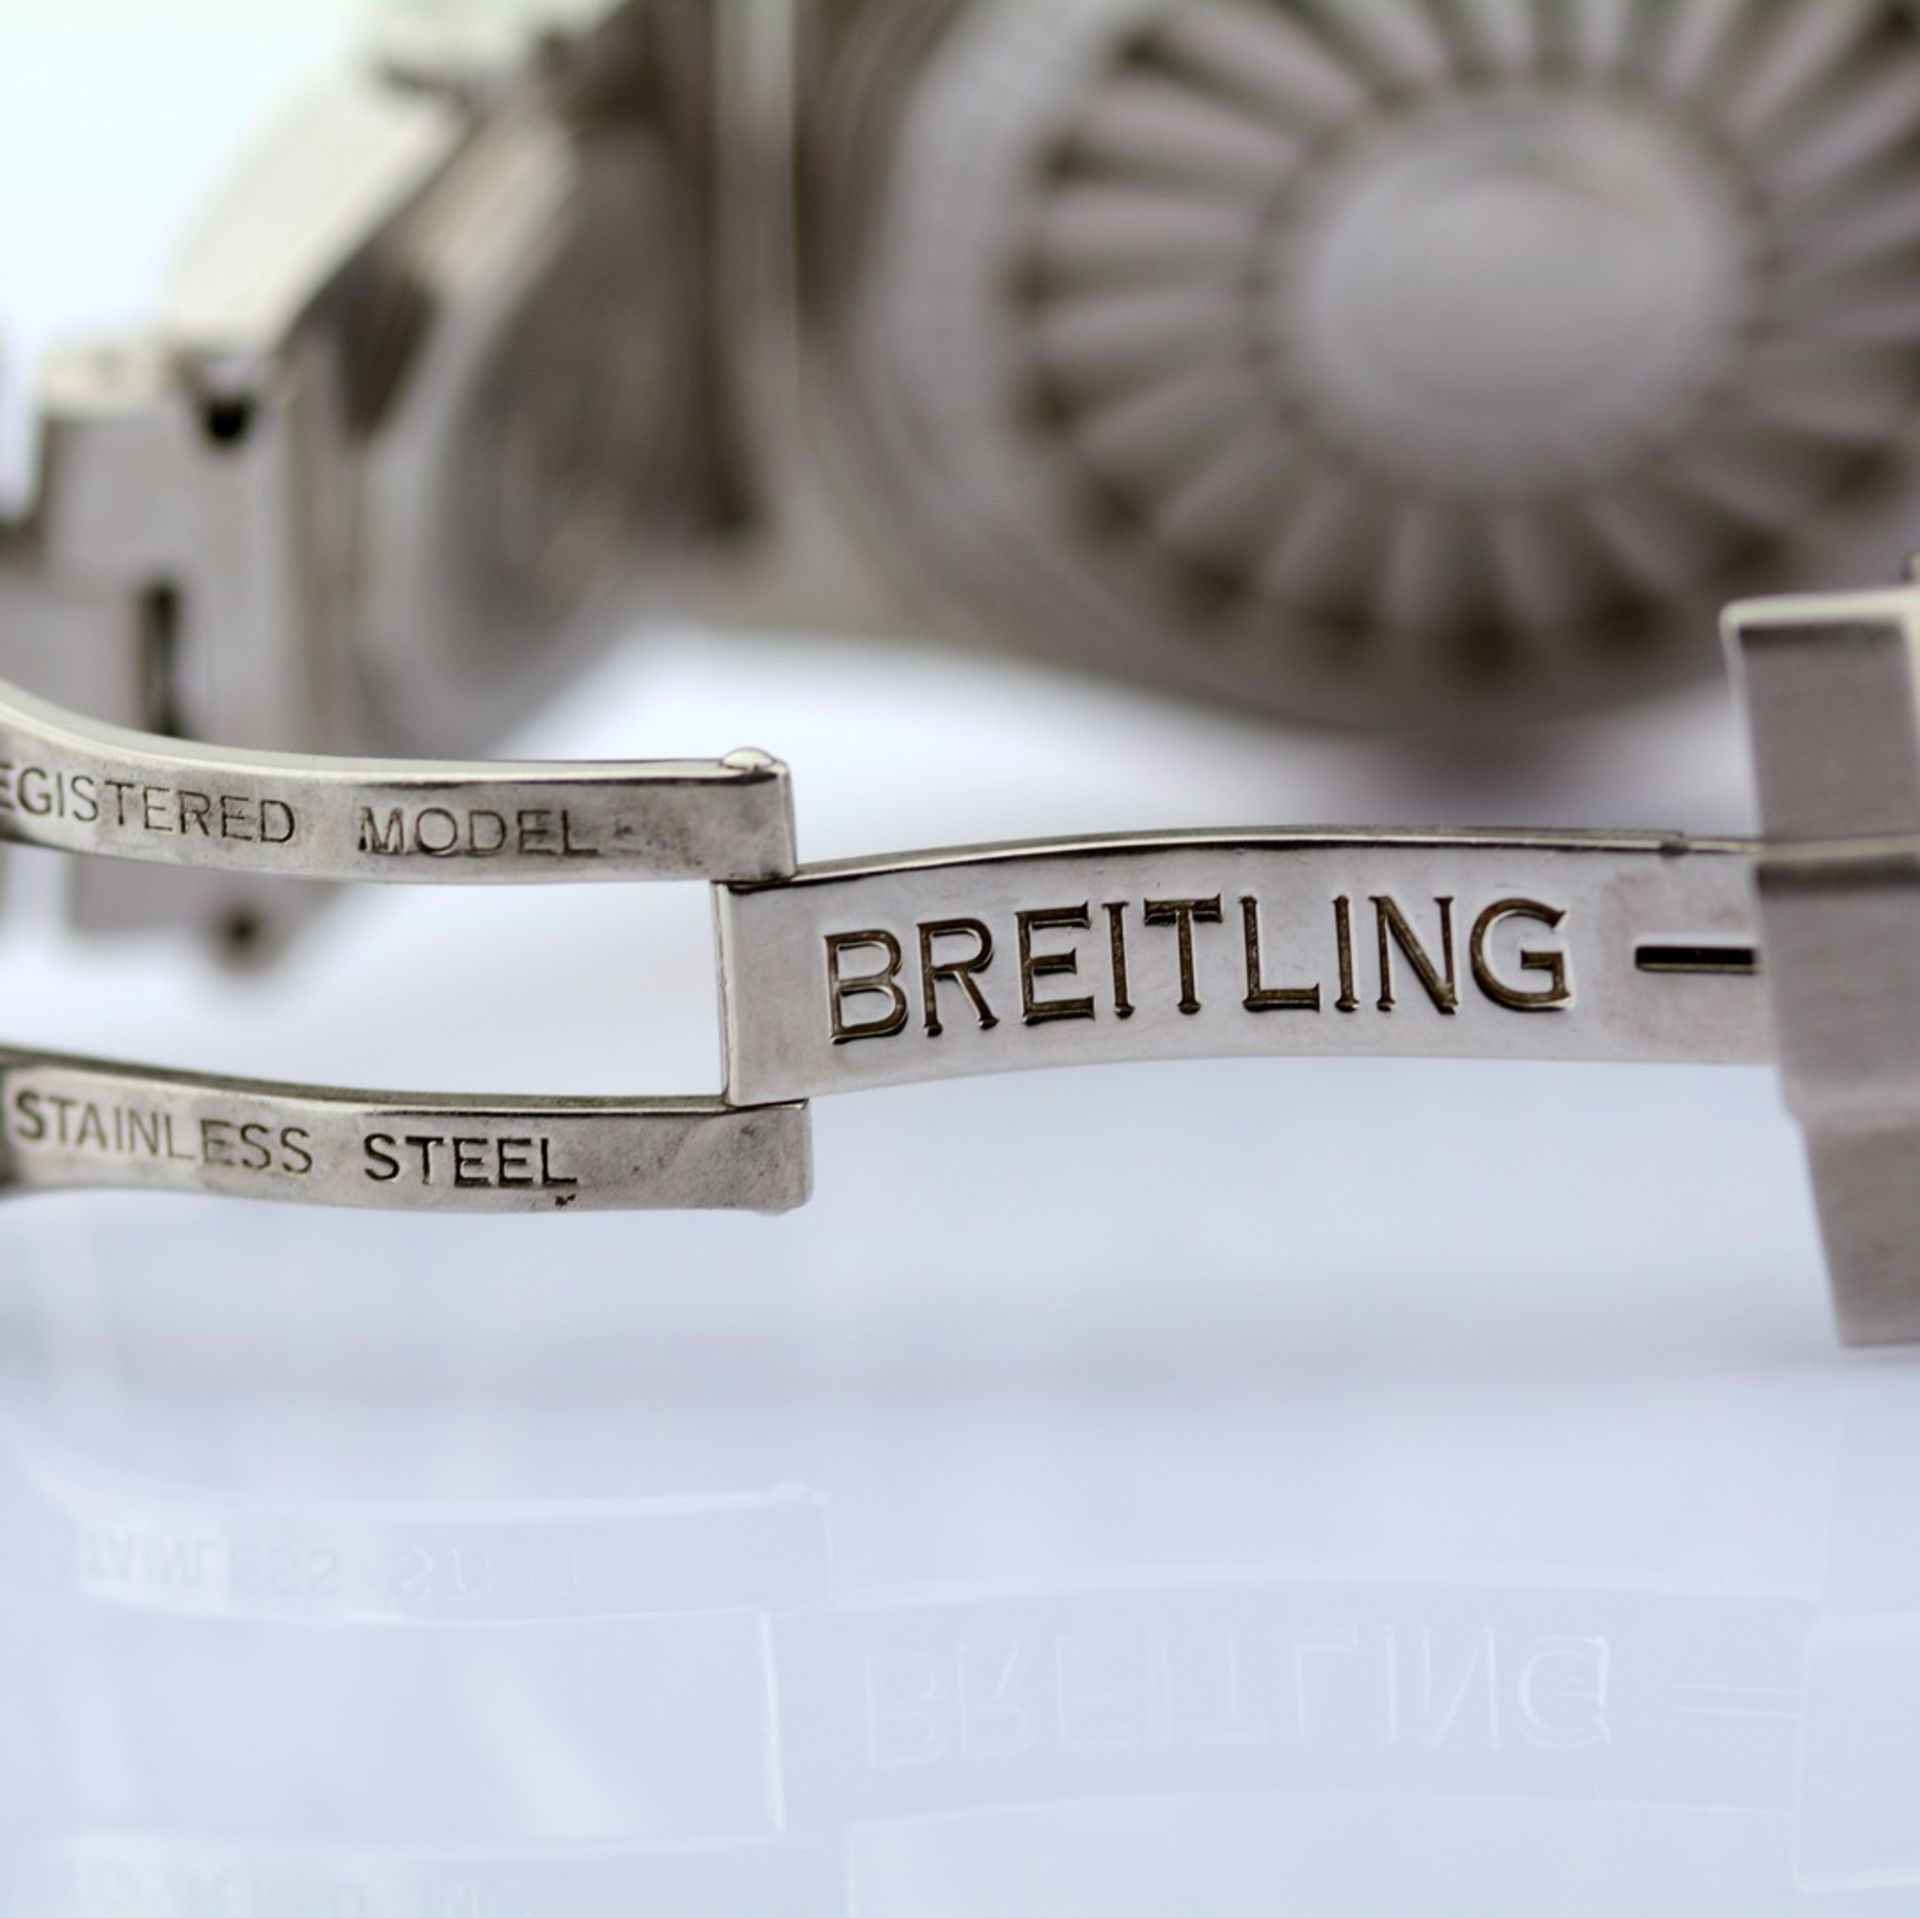 Breitling / A68362 B-1 With UTC Module - Gentlemen's Steel Wristwatch - Image 4 of 12